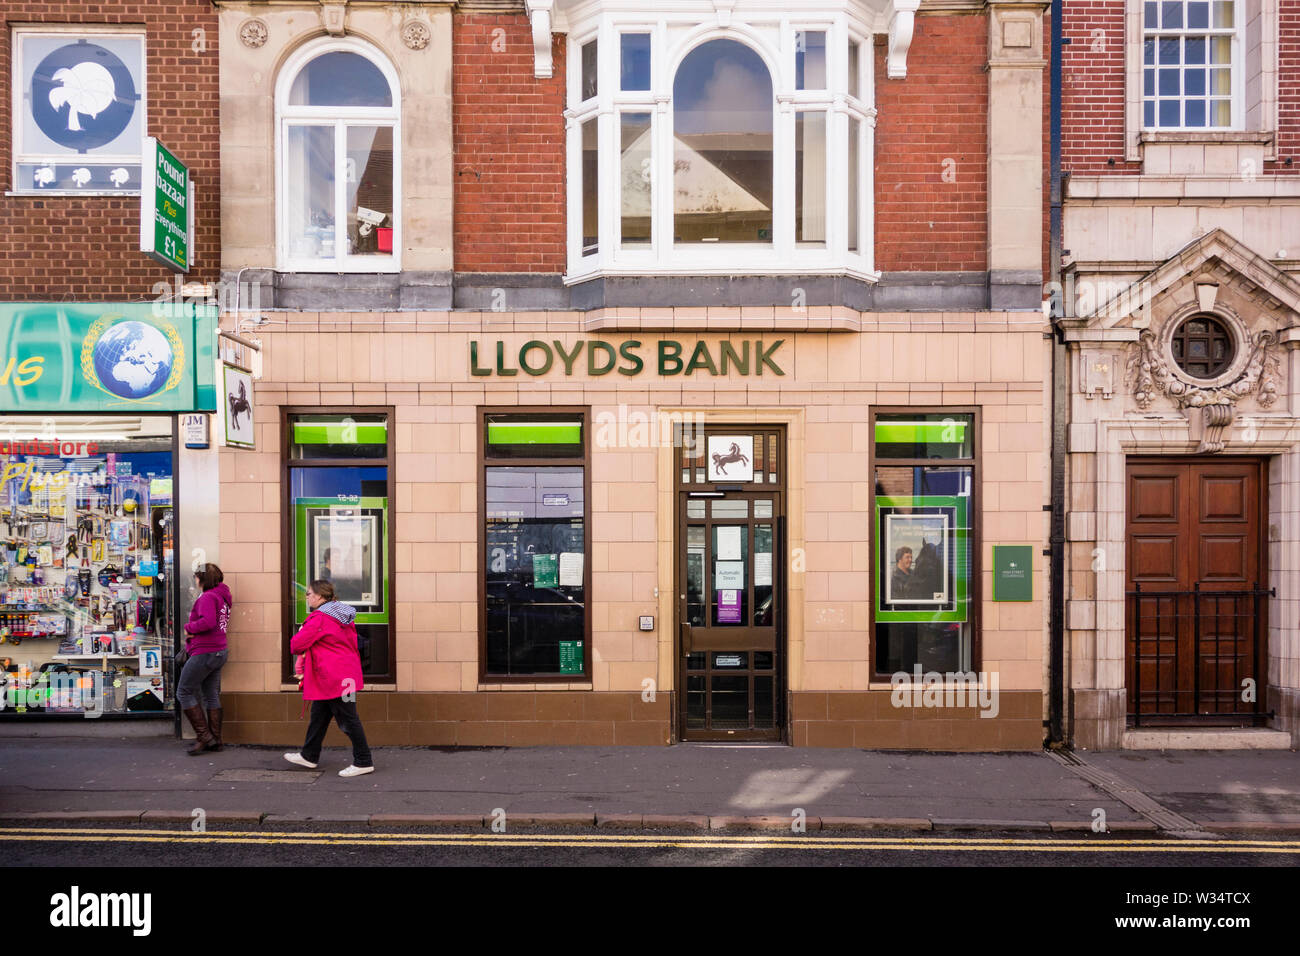 Lloyds Bank High Street branch, Stourbridge, West Midlands, UK Stock Photo